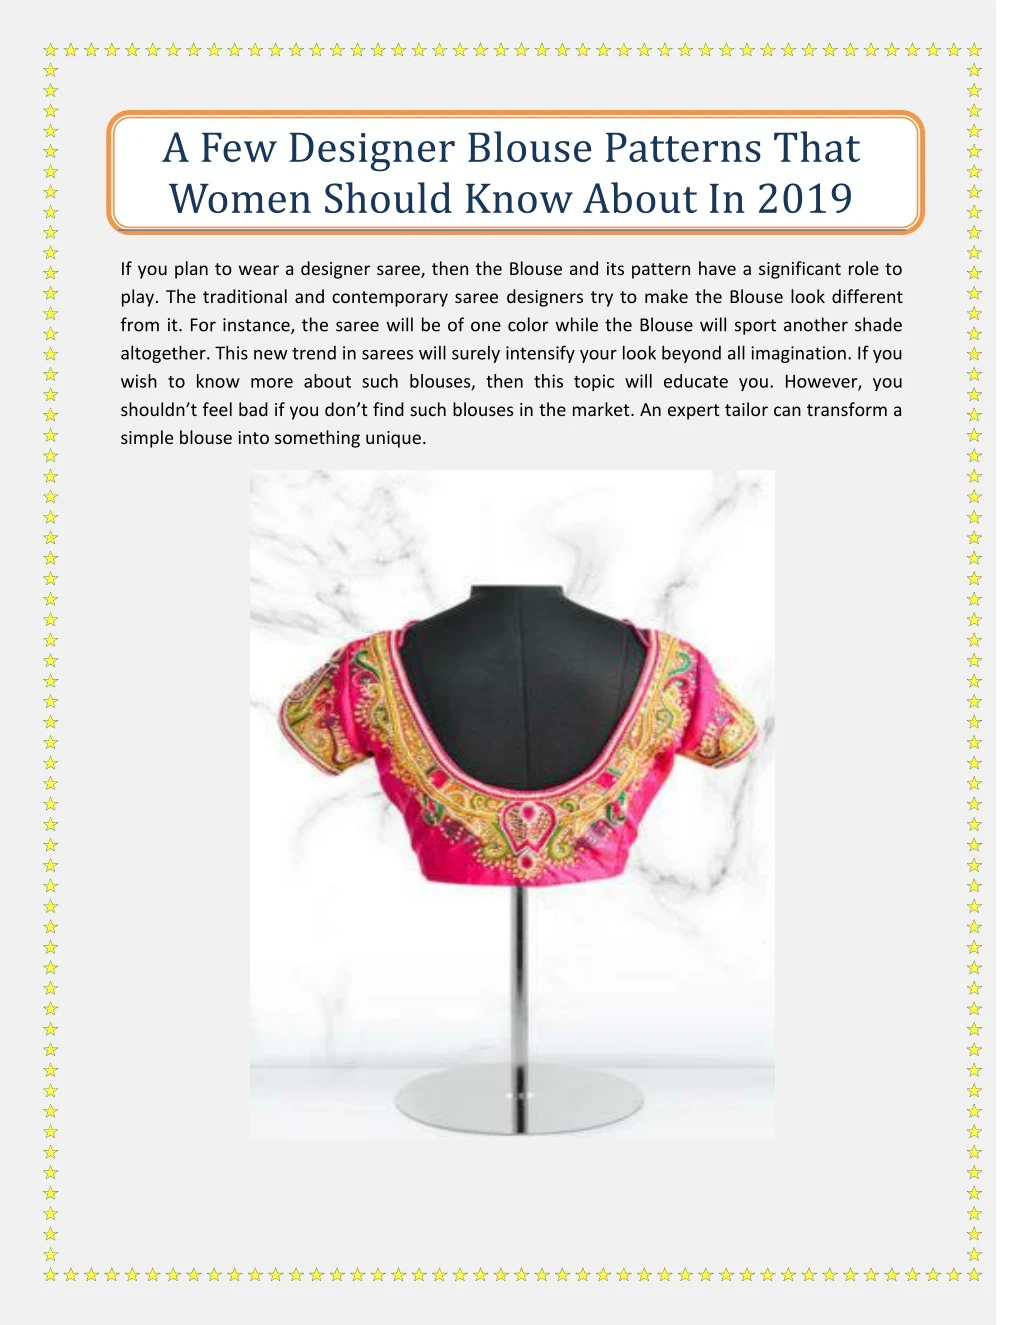 a few designer blouse patterns that women should